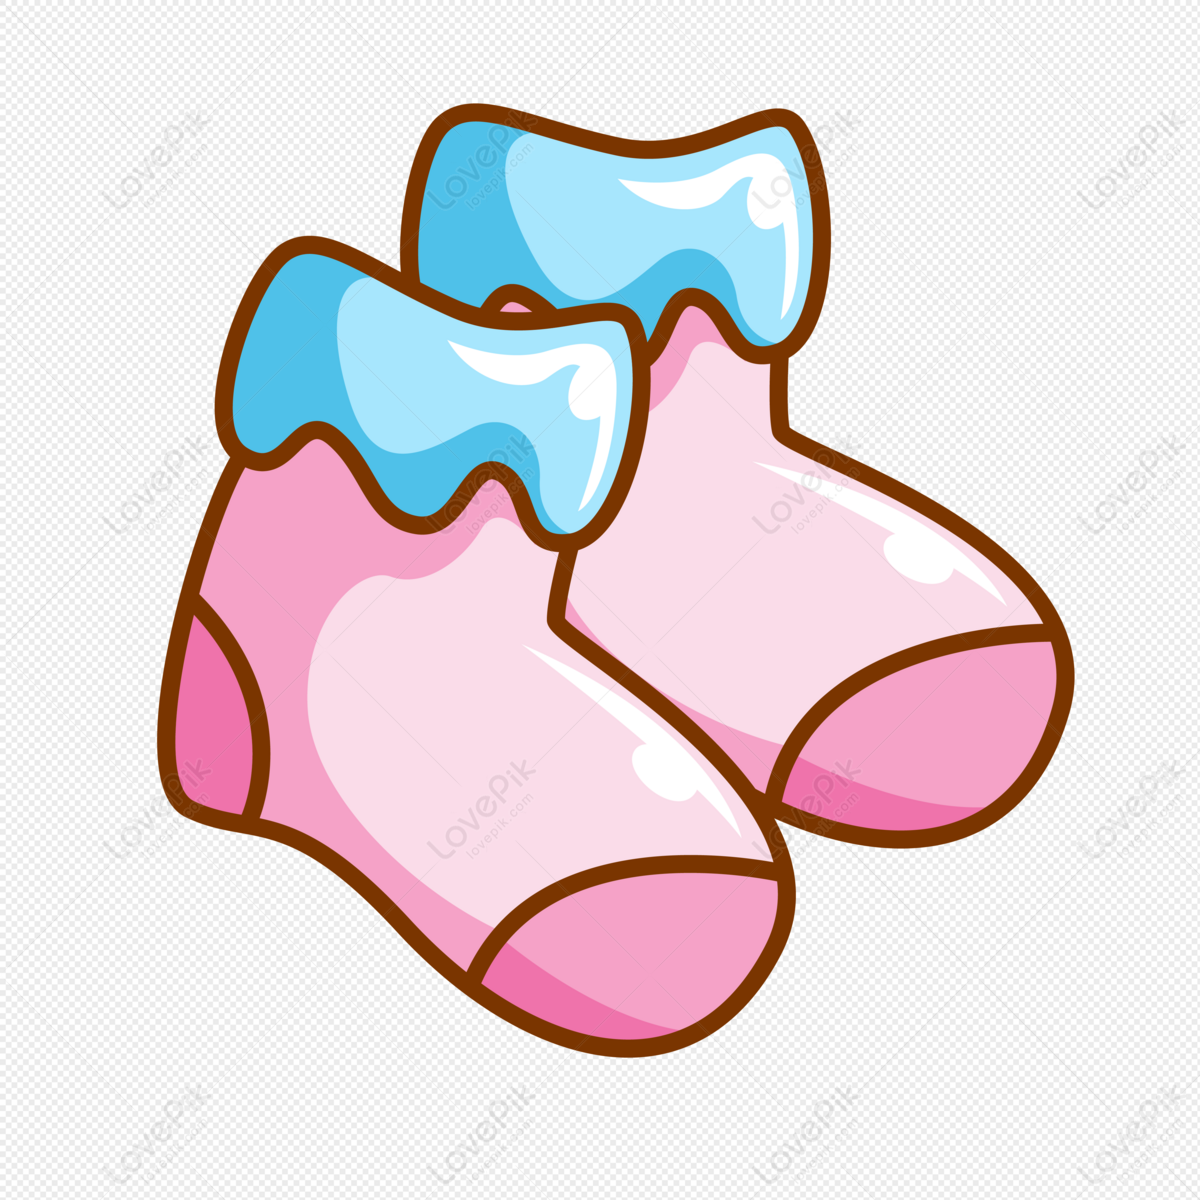 Vector Free Buckle Baby Socks PNG Image Free Download And Clipart Image For  Free Download - Lovepik